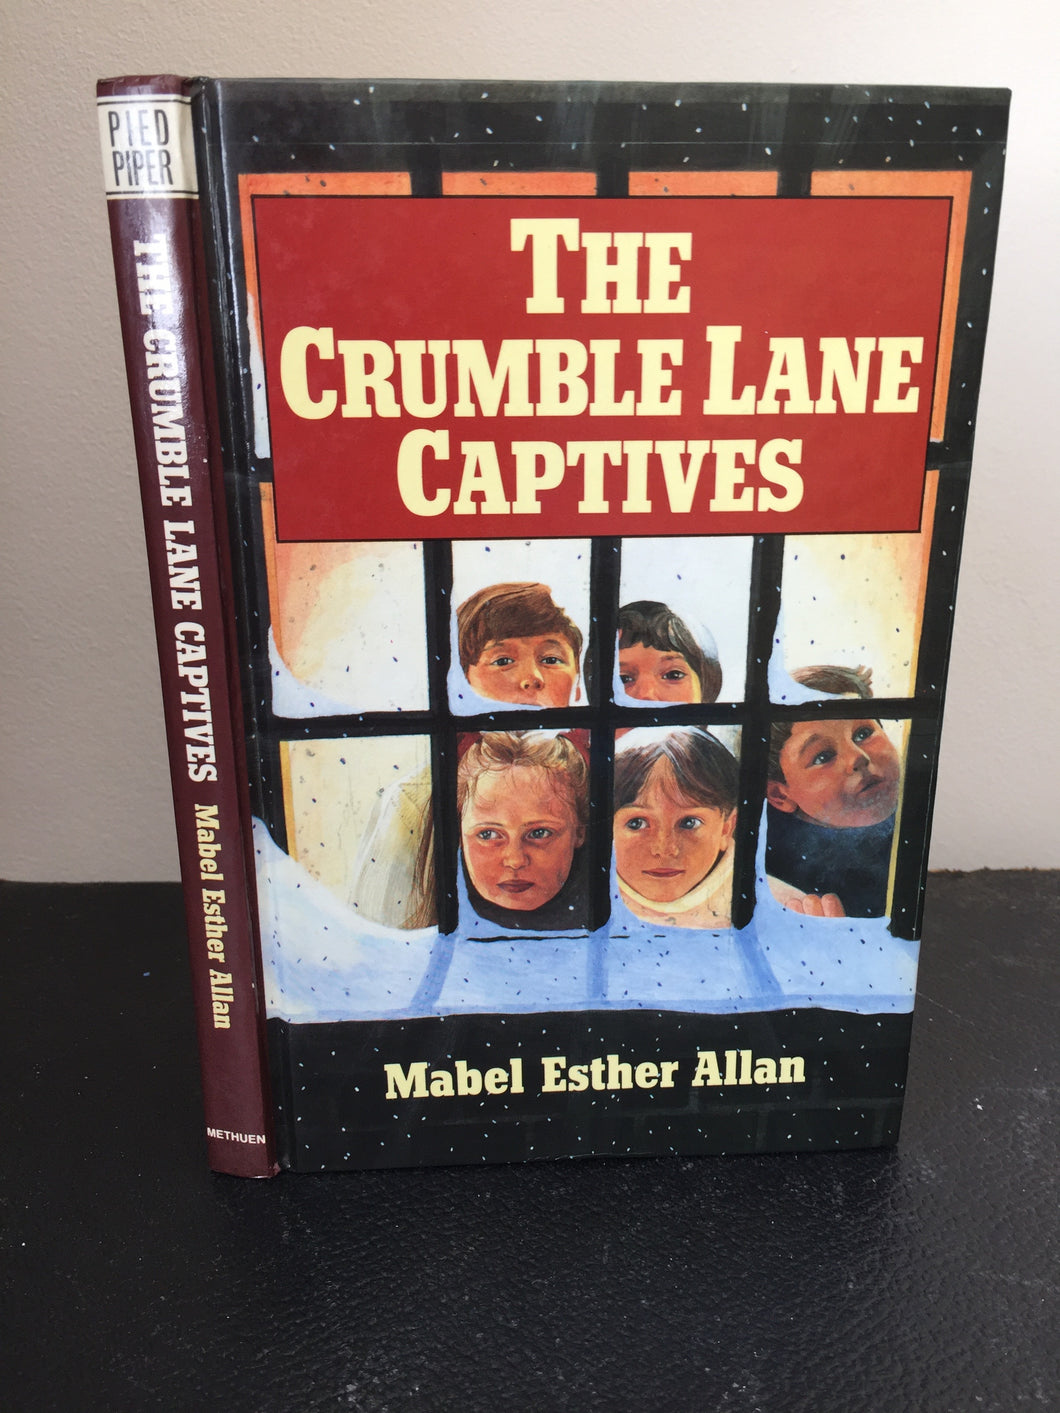 The Crumble Lane Captives